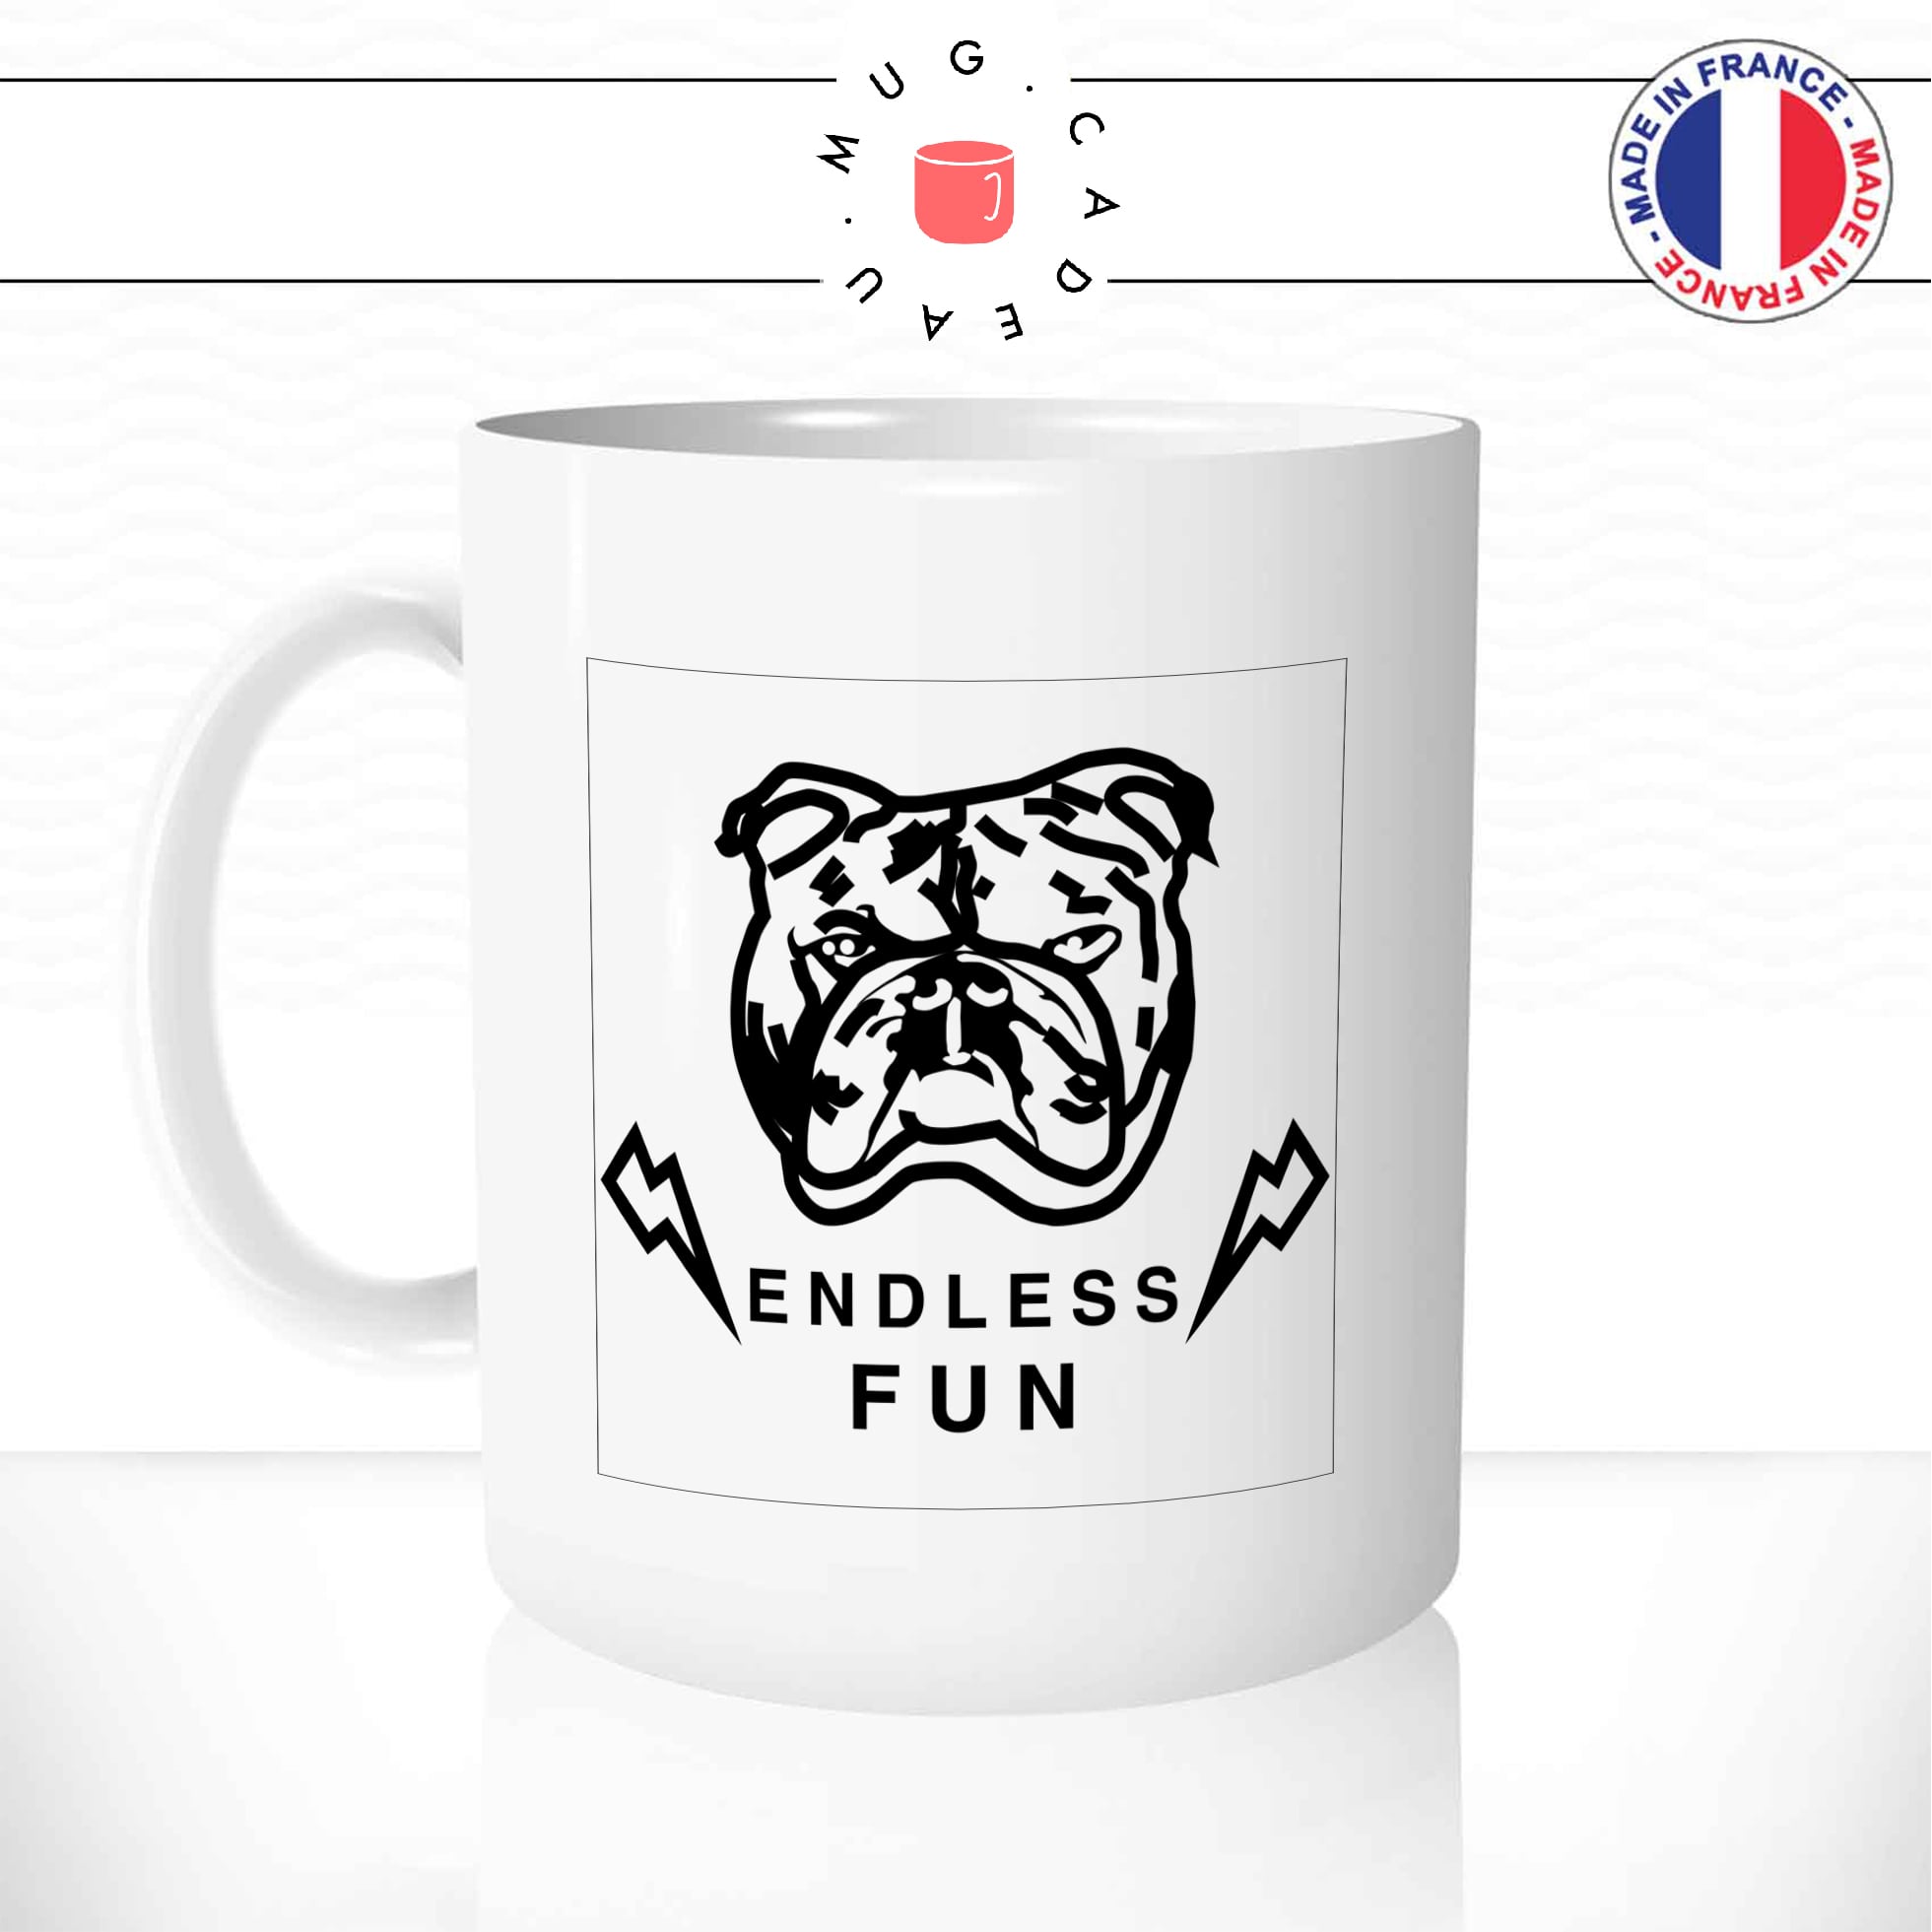 mug-tasse-chien-endless-fun-eclairs-pug-race-buldog-drole-mignon-dessin-animal-cafe-thé-idée-cadeau-original1